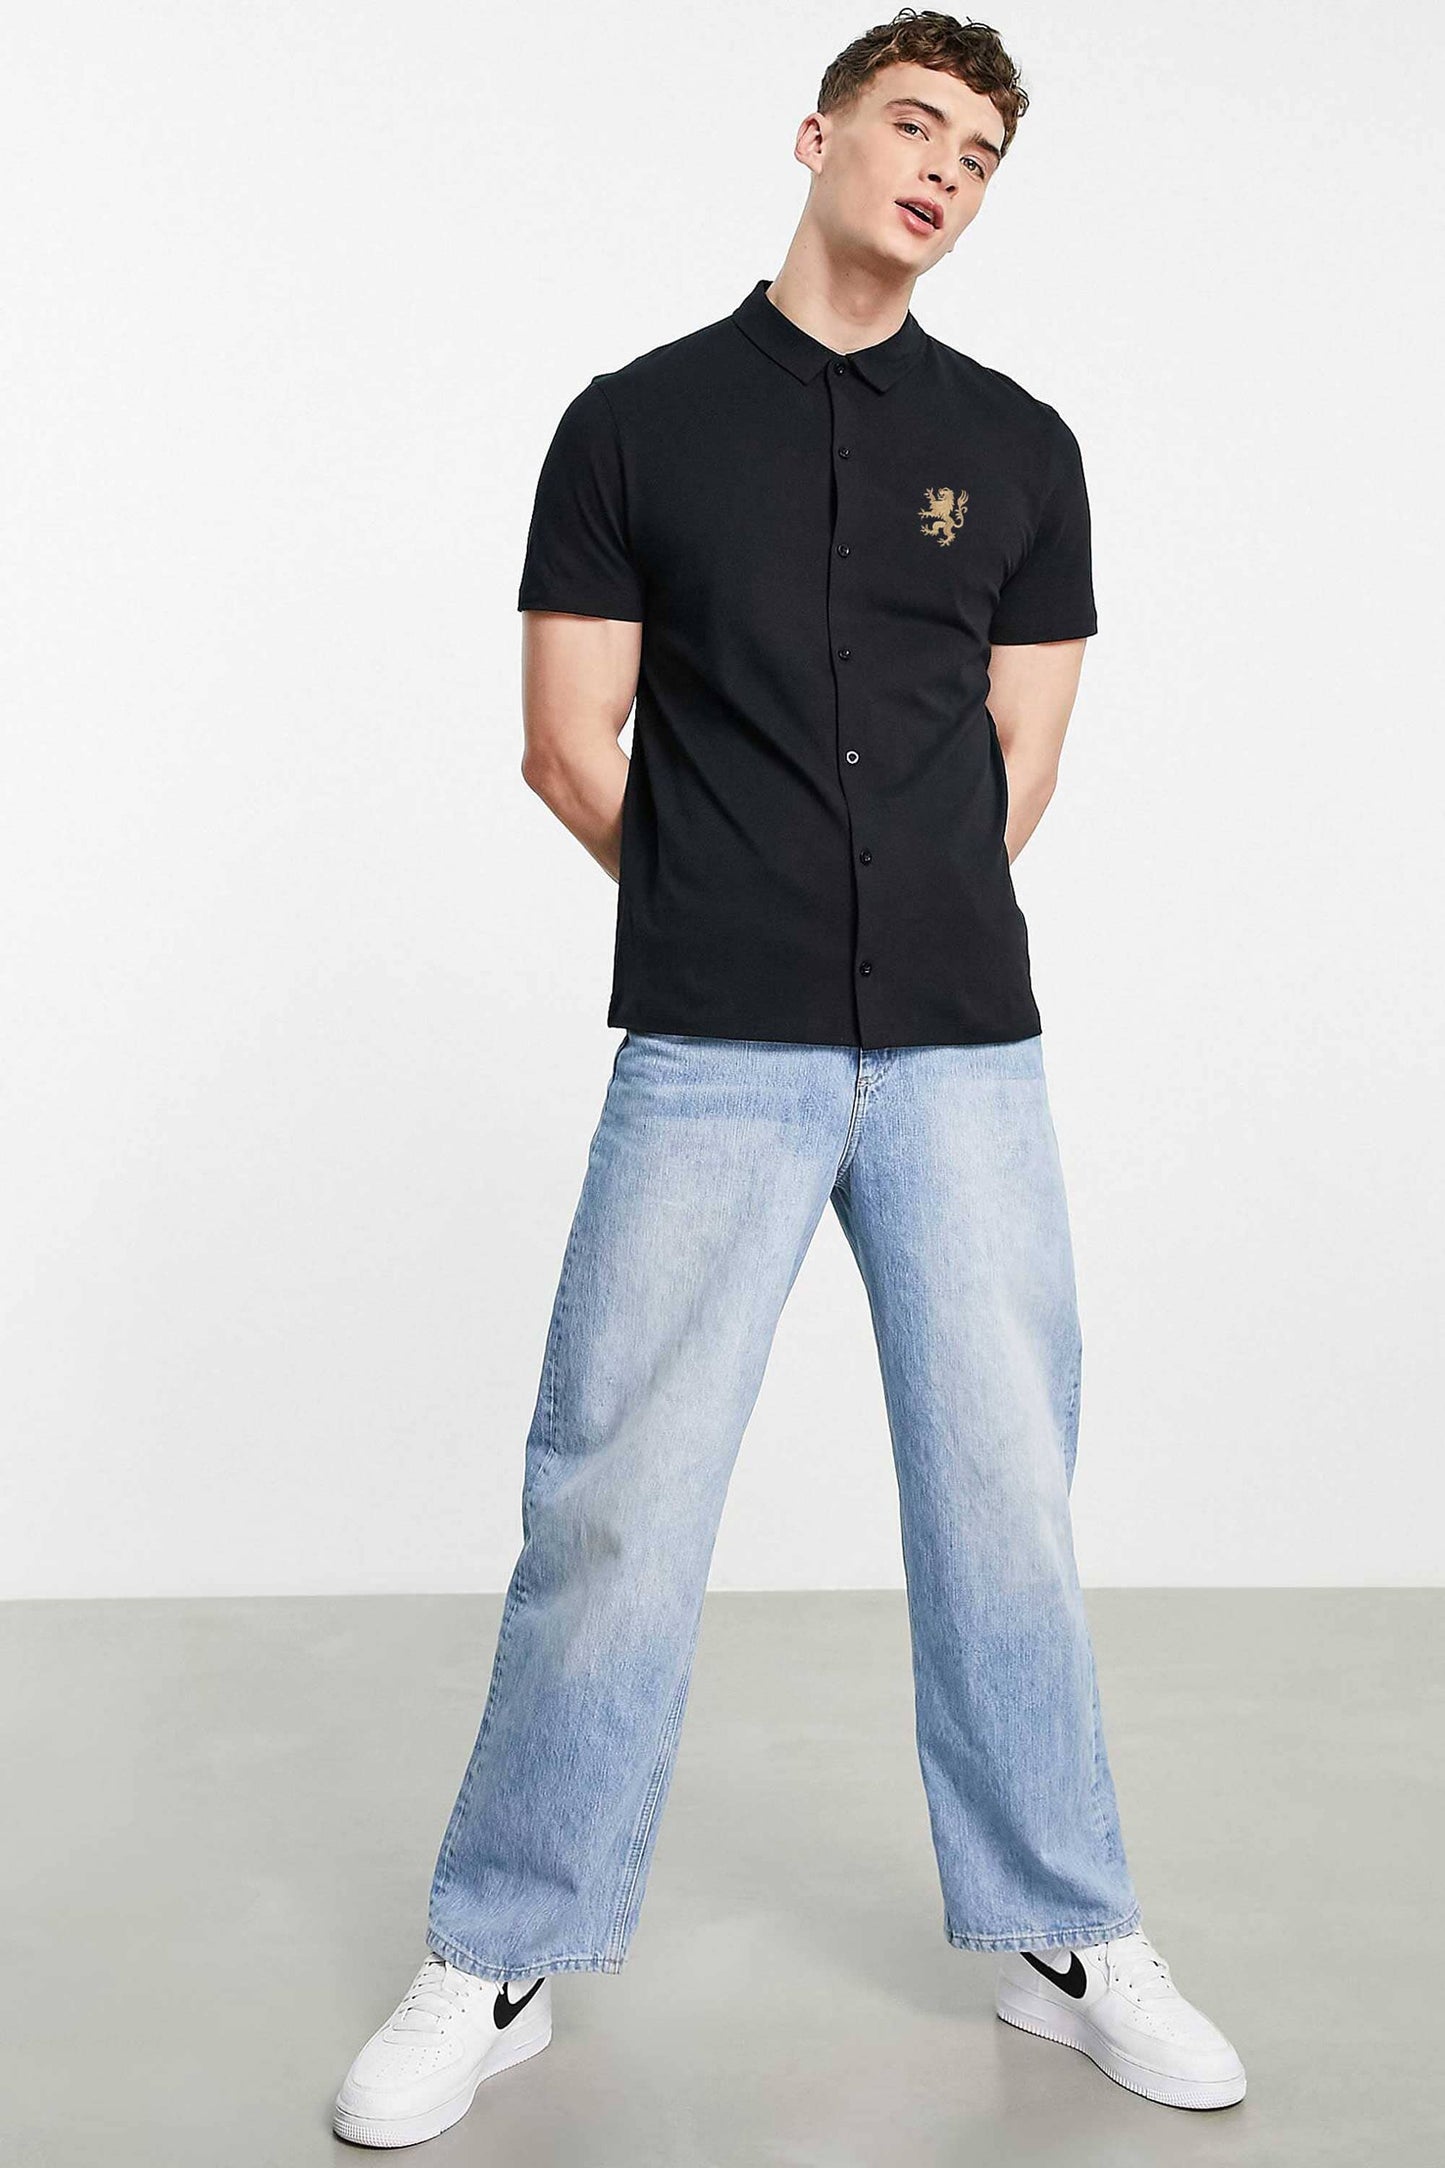 Polo Republica Men's Lion Embroidered Short Sleeves Casual Shirt Men's Casual Shirt Polo Republica 